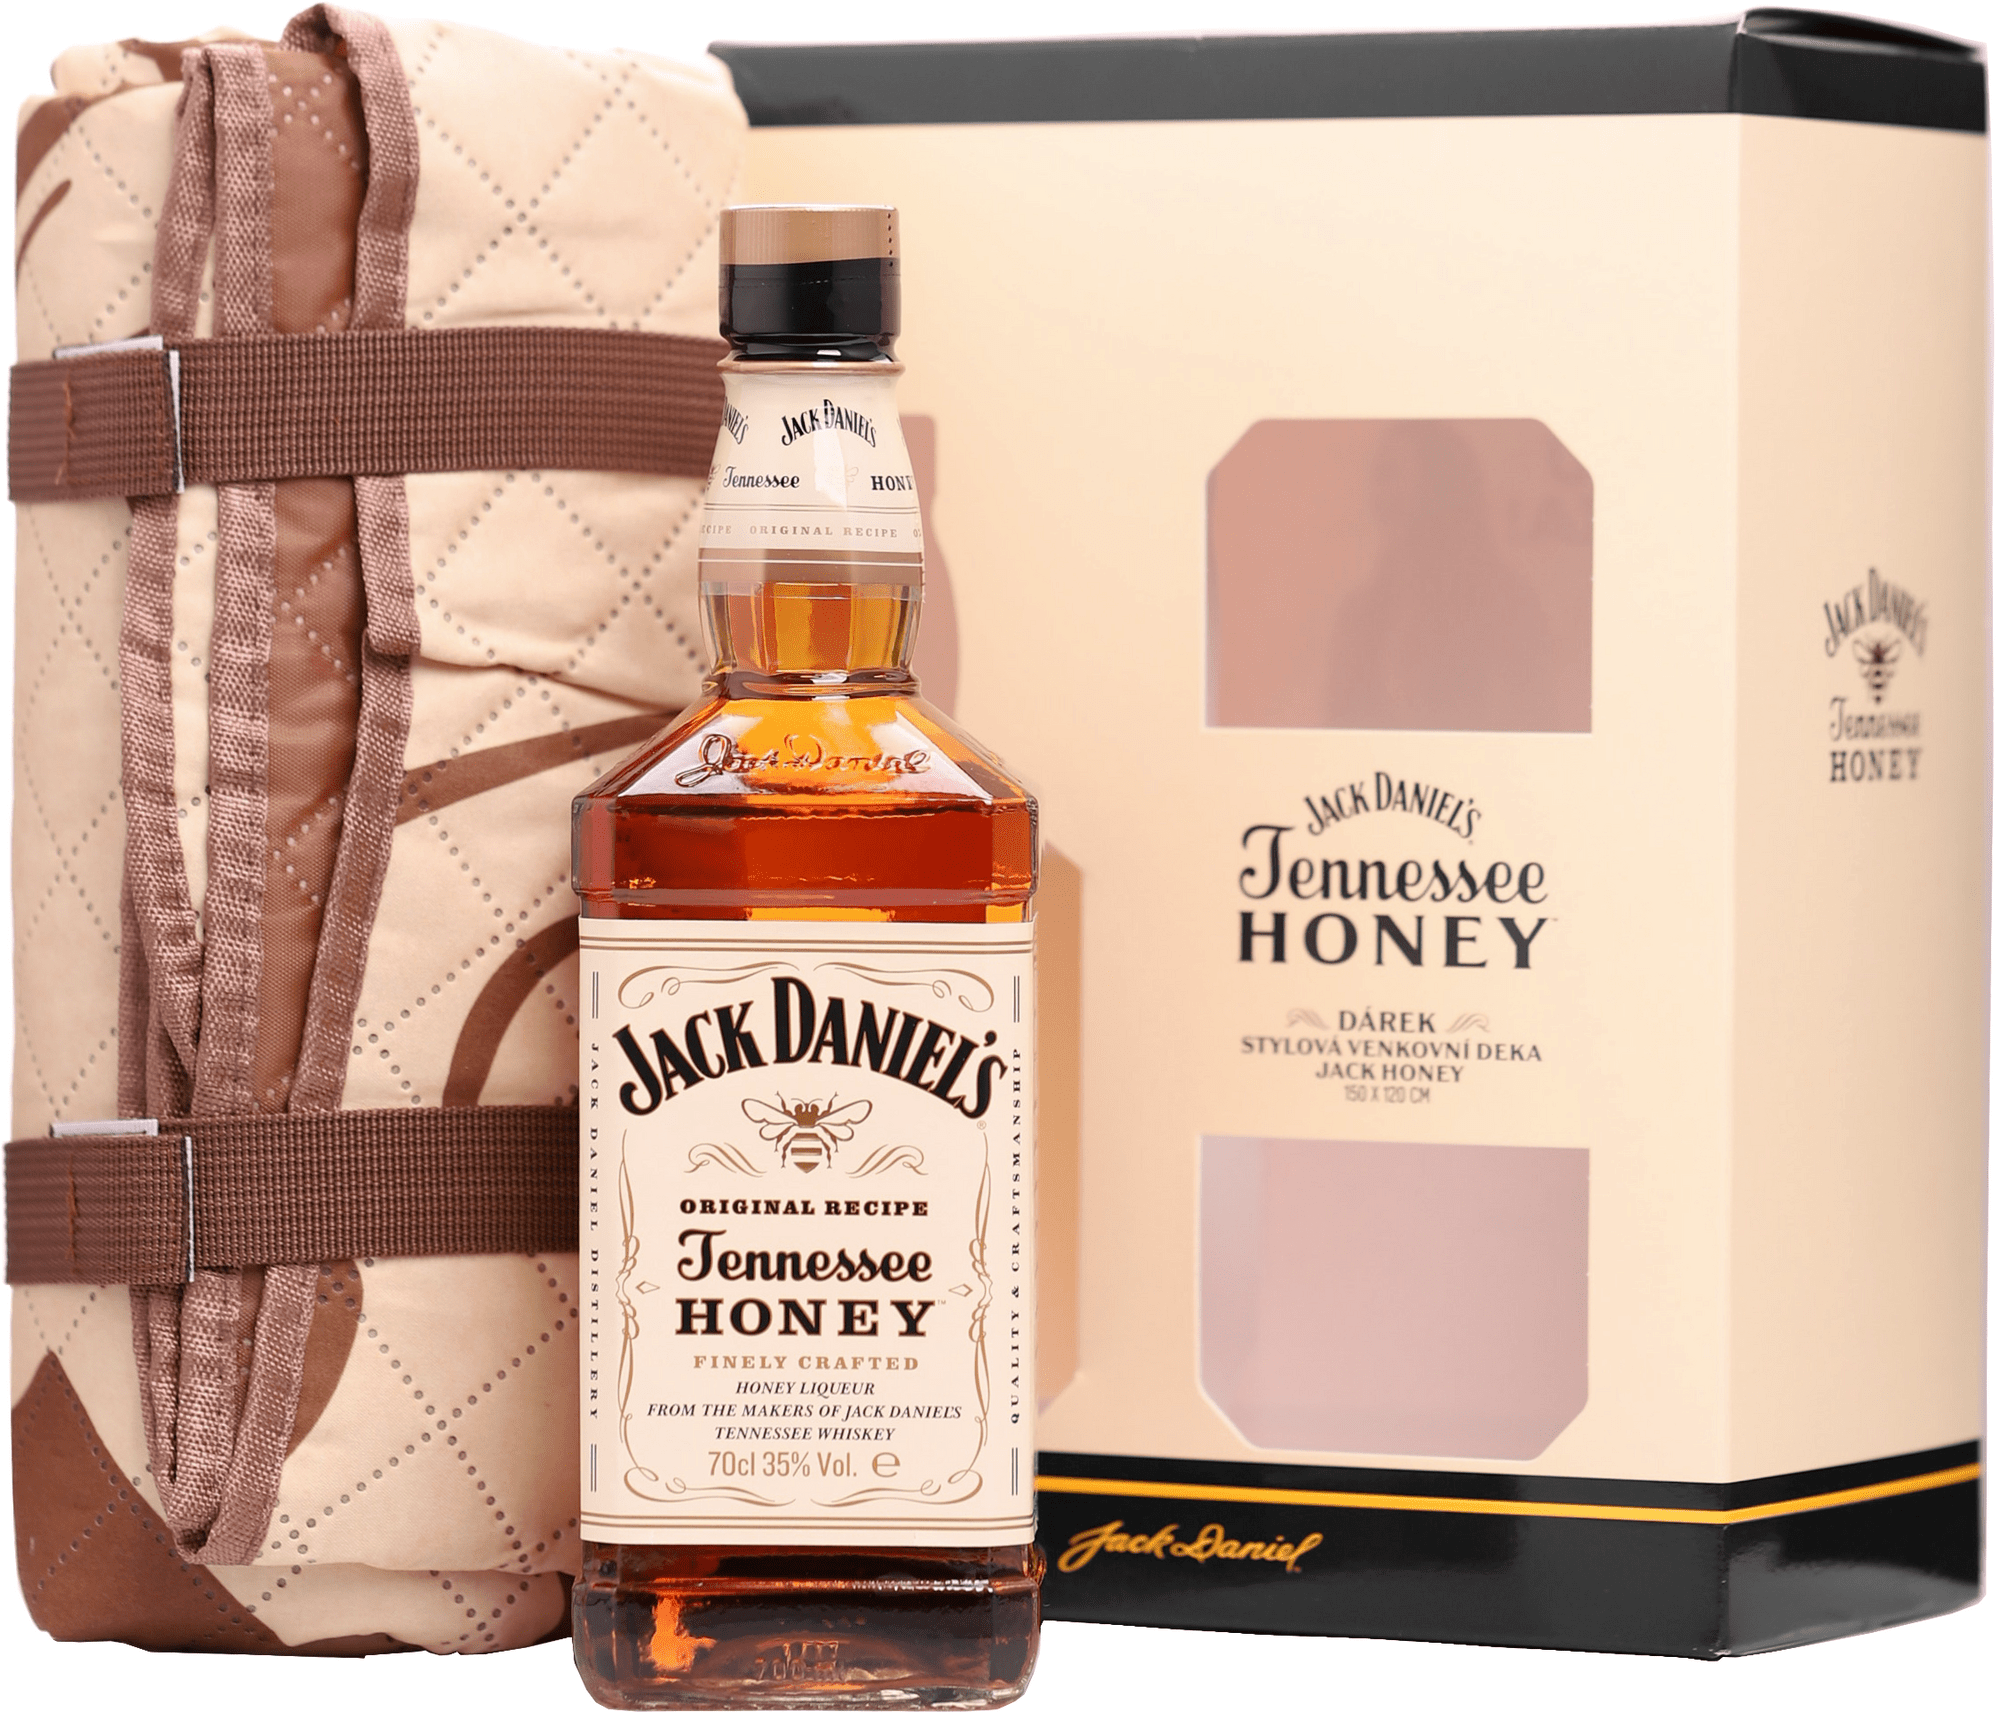 Jack Daniel's Honey + deka 35% 0,7l (darčekové balenie kazeta)